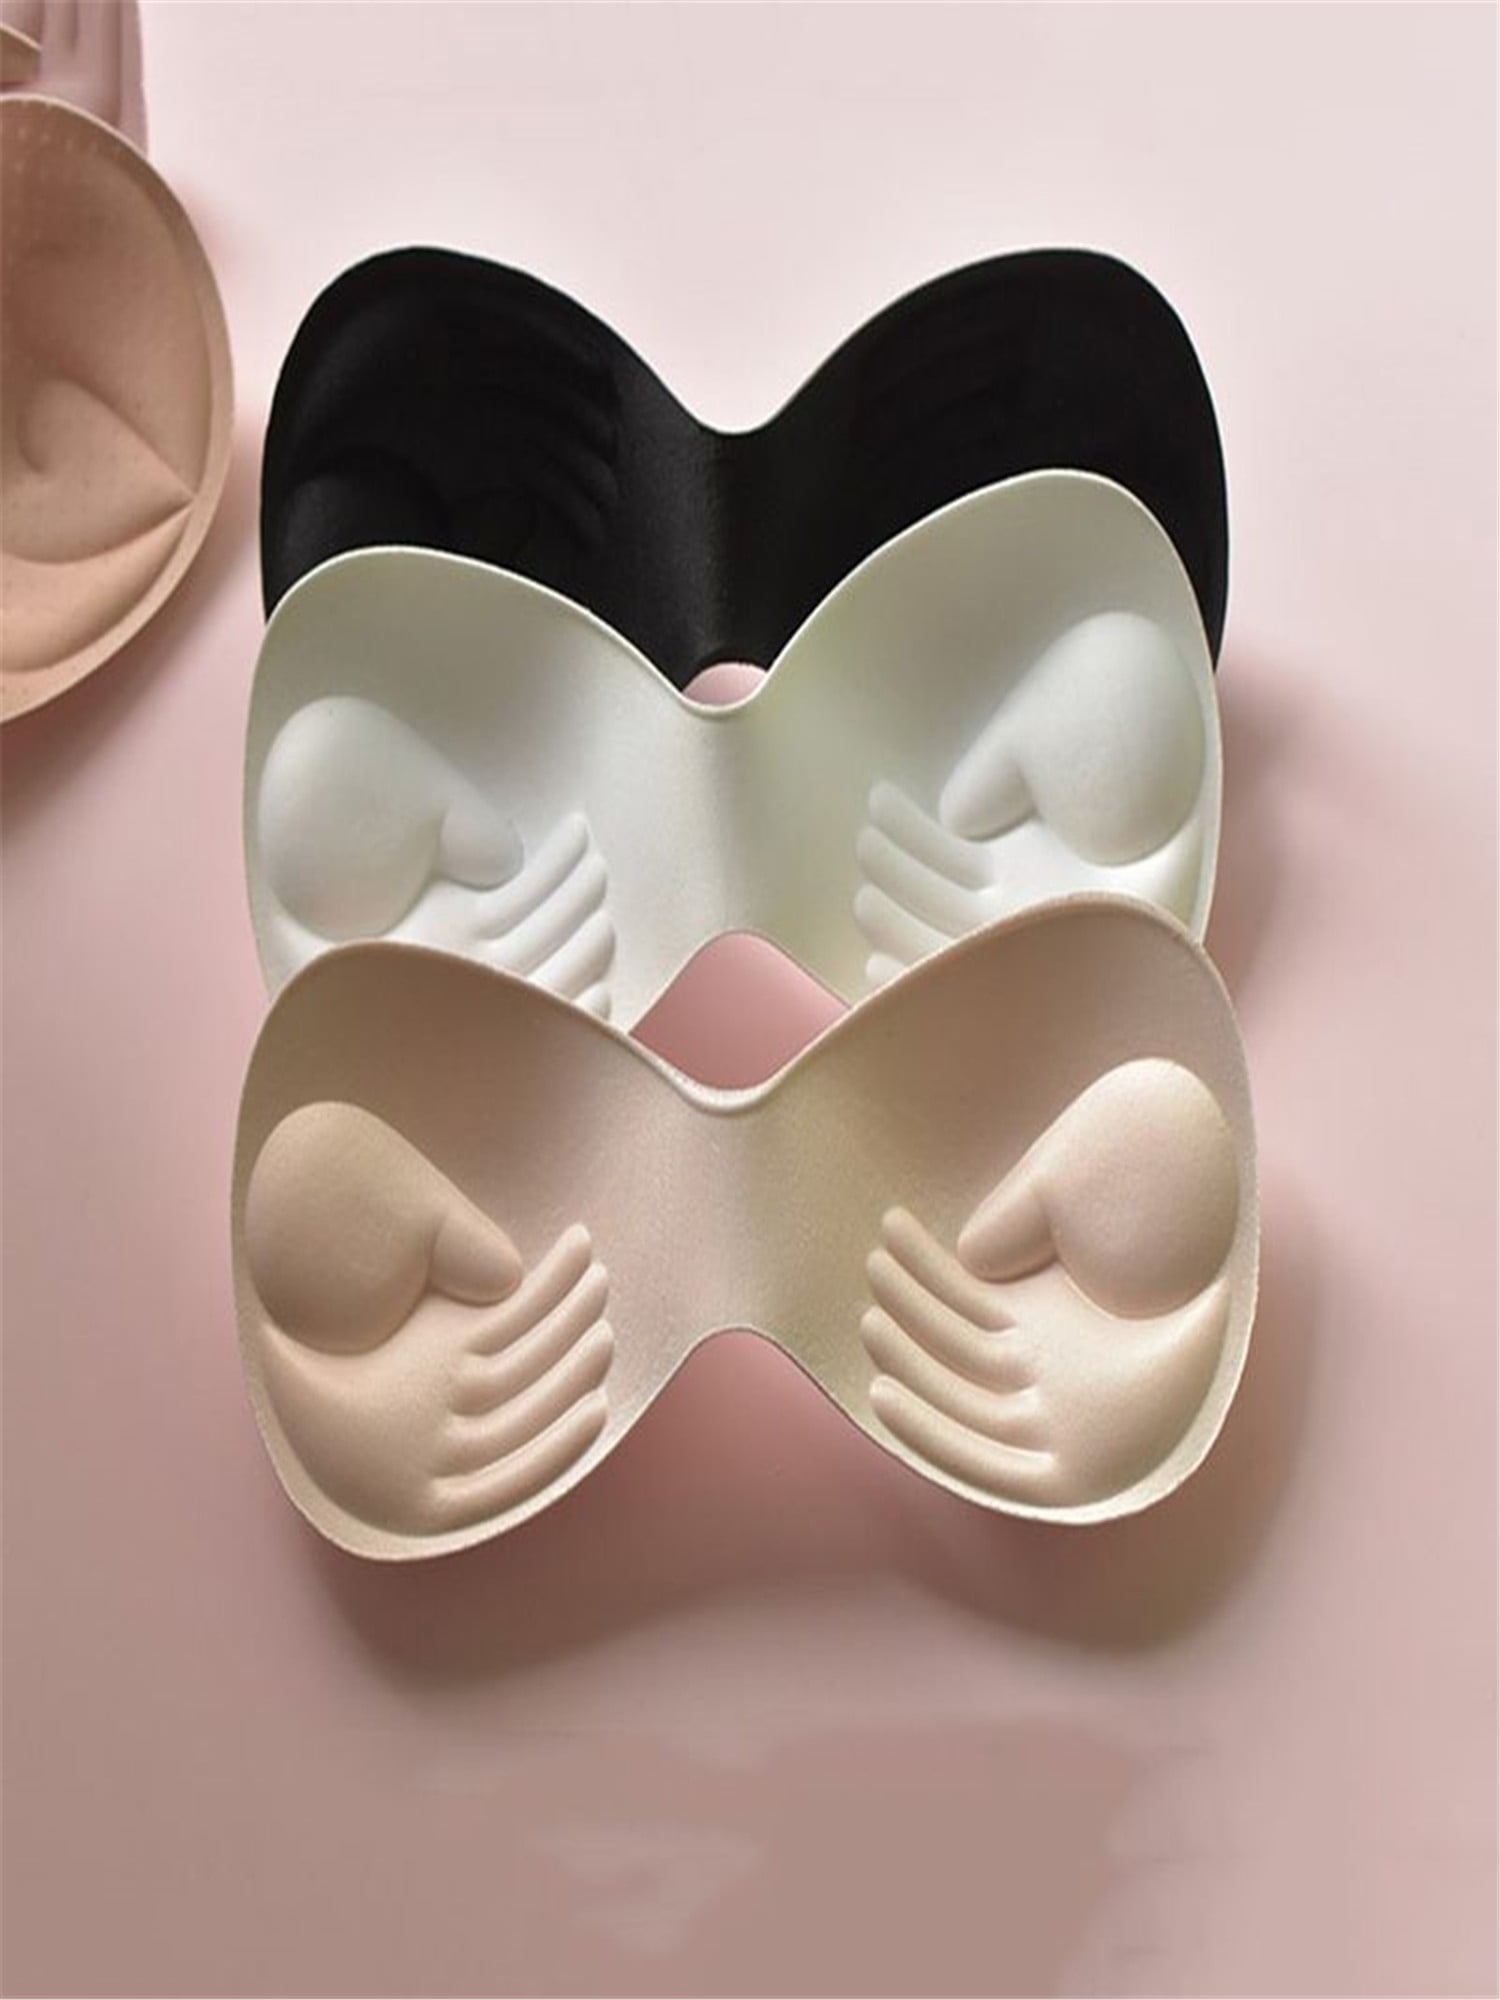 3Pairs Triangle Shape Sponge Breathable Soft Chest Pad Reusable Breast Enlargement Enhancer Shaper Underwear Swimwear Yoga Clothes Bra Insert Cushions for Women Lady Girls